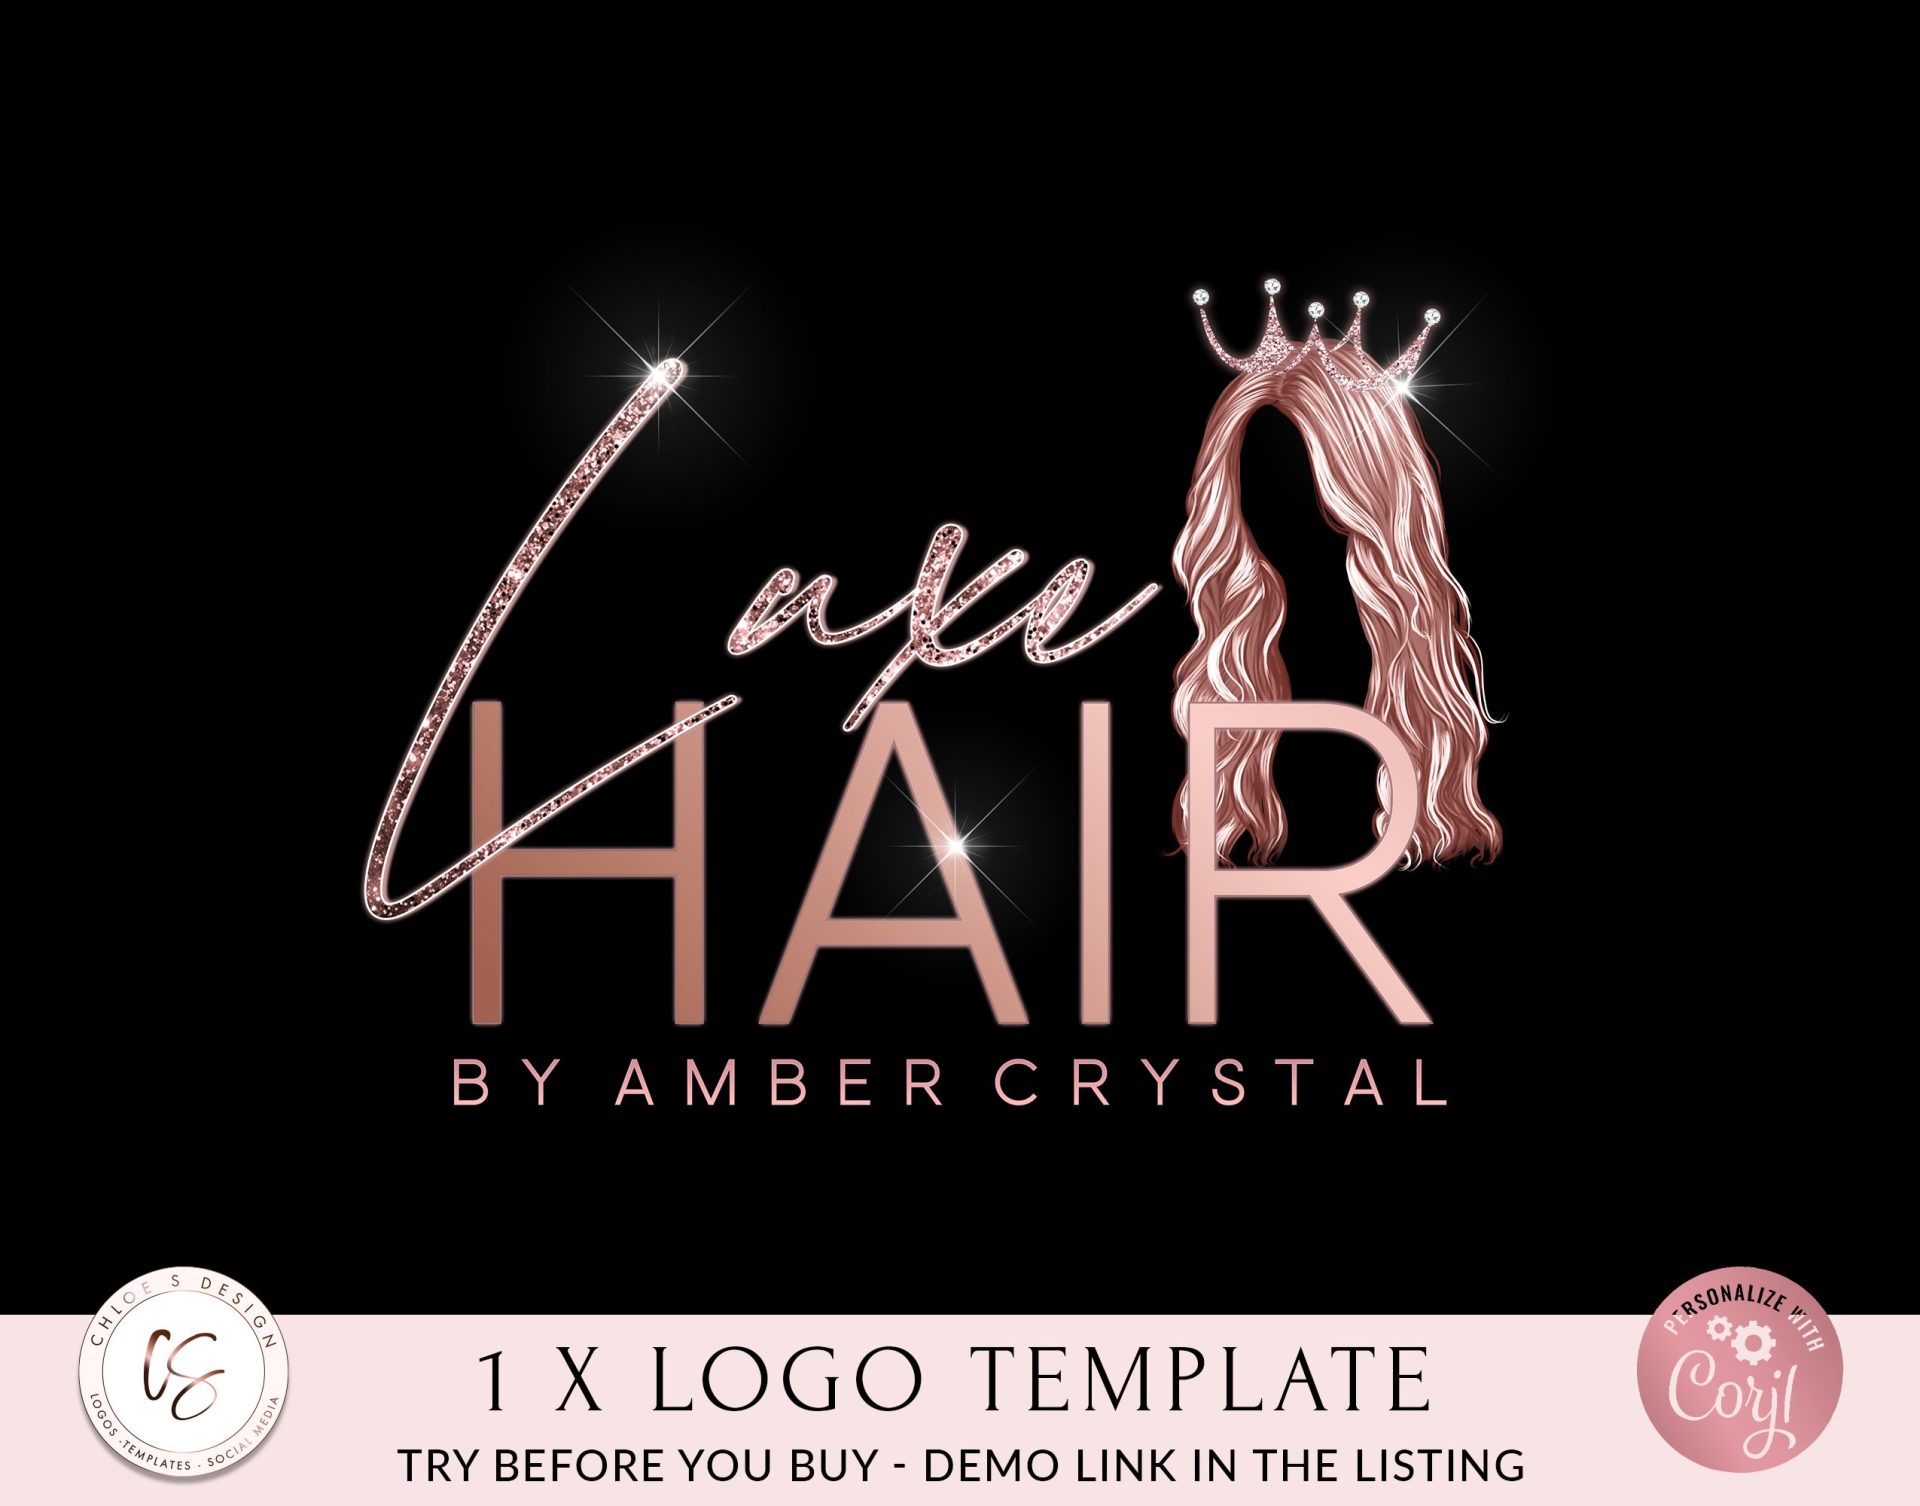 stylist logo ideas 7